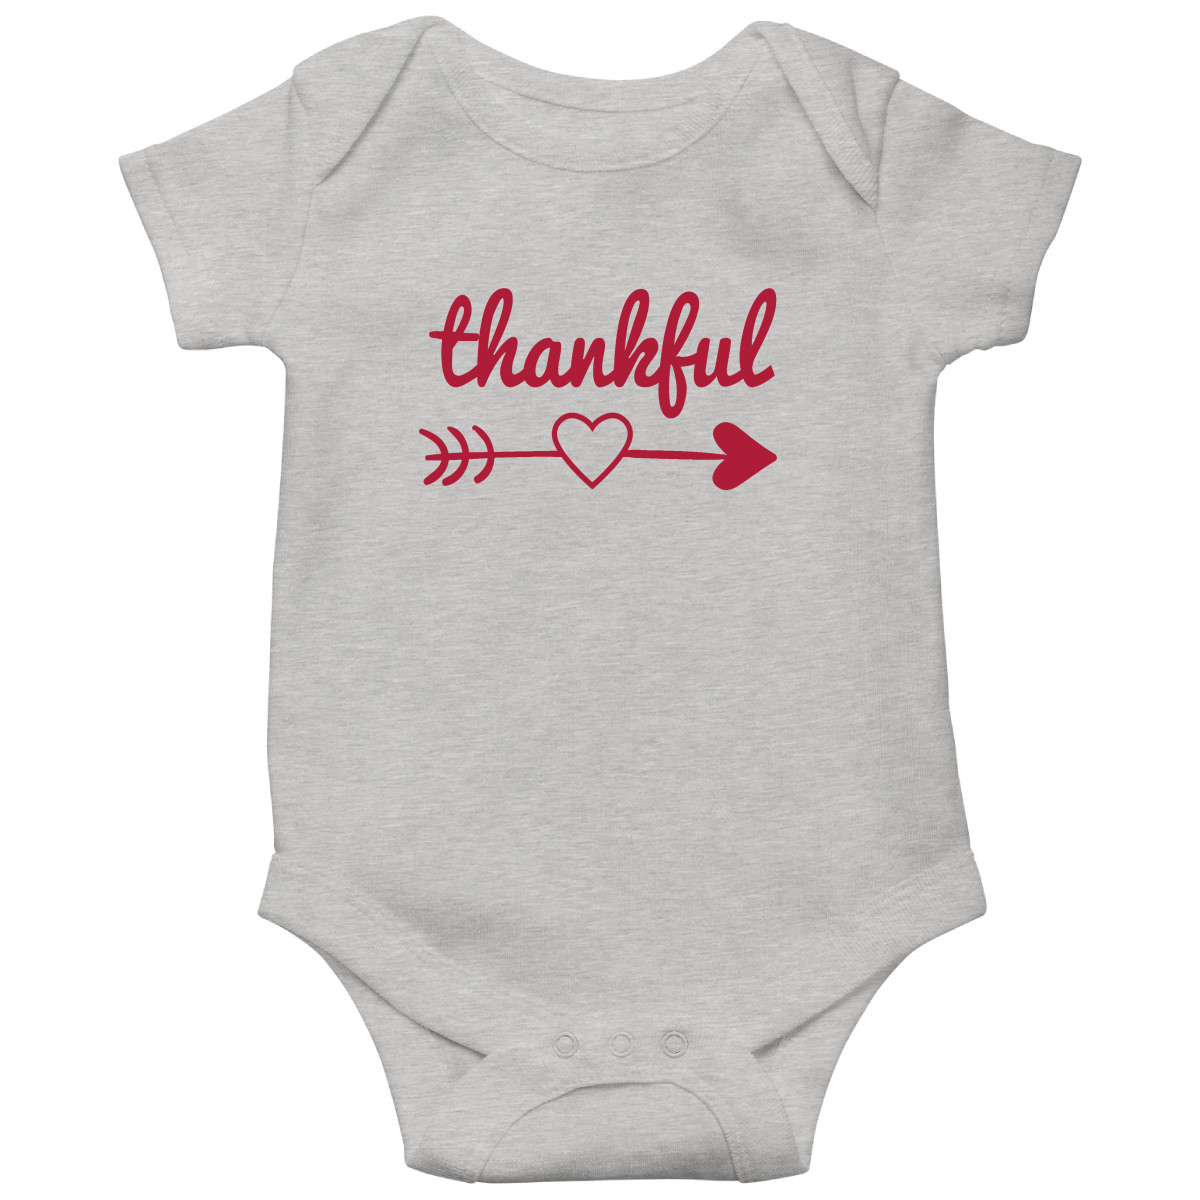 Thankful Heart Baby Bodysuits | Gray